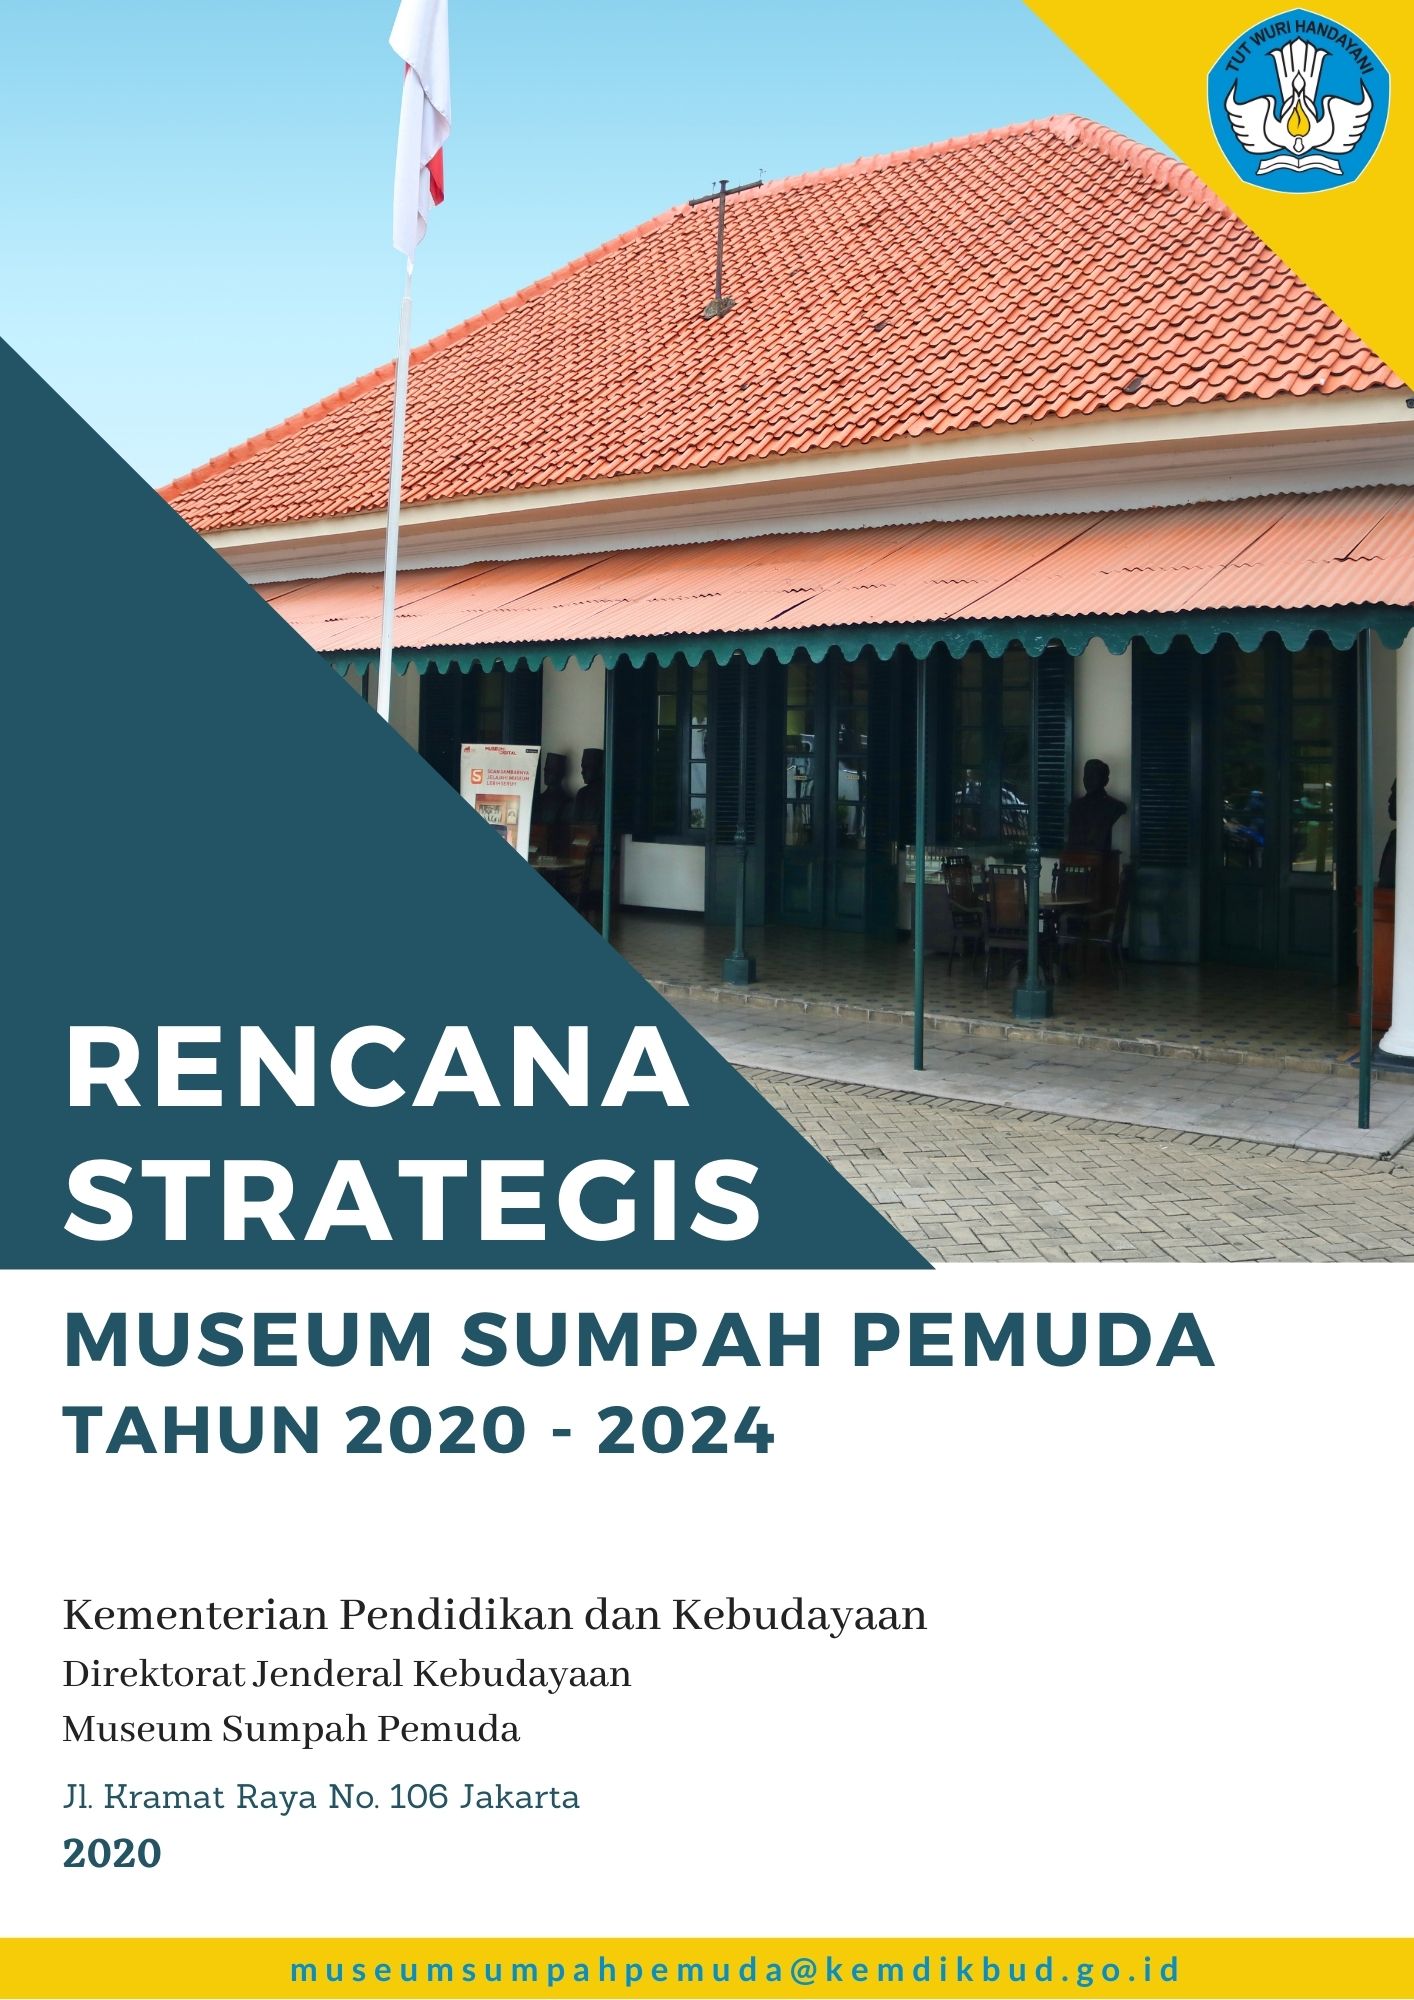 You are currently viewing Renstra Museum Sumpah Pemuda tahun 2020-2024